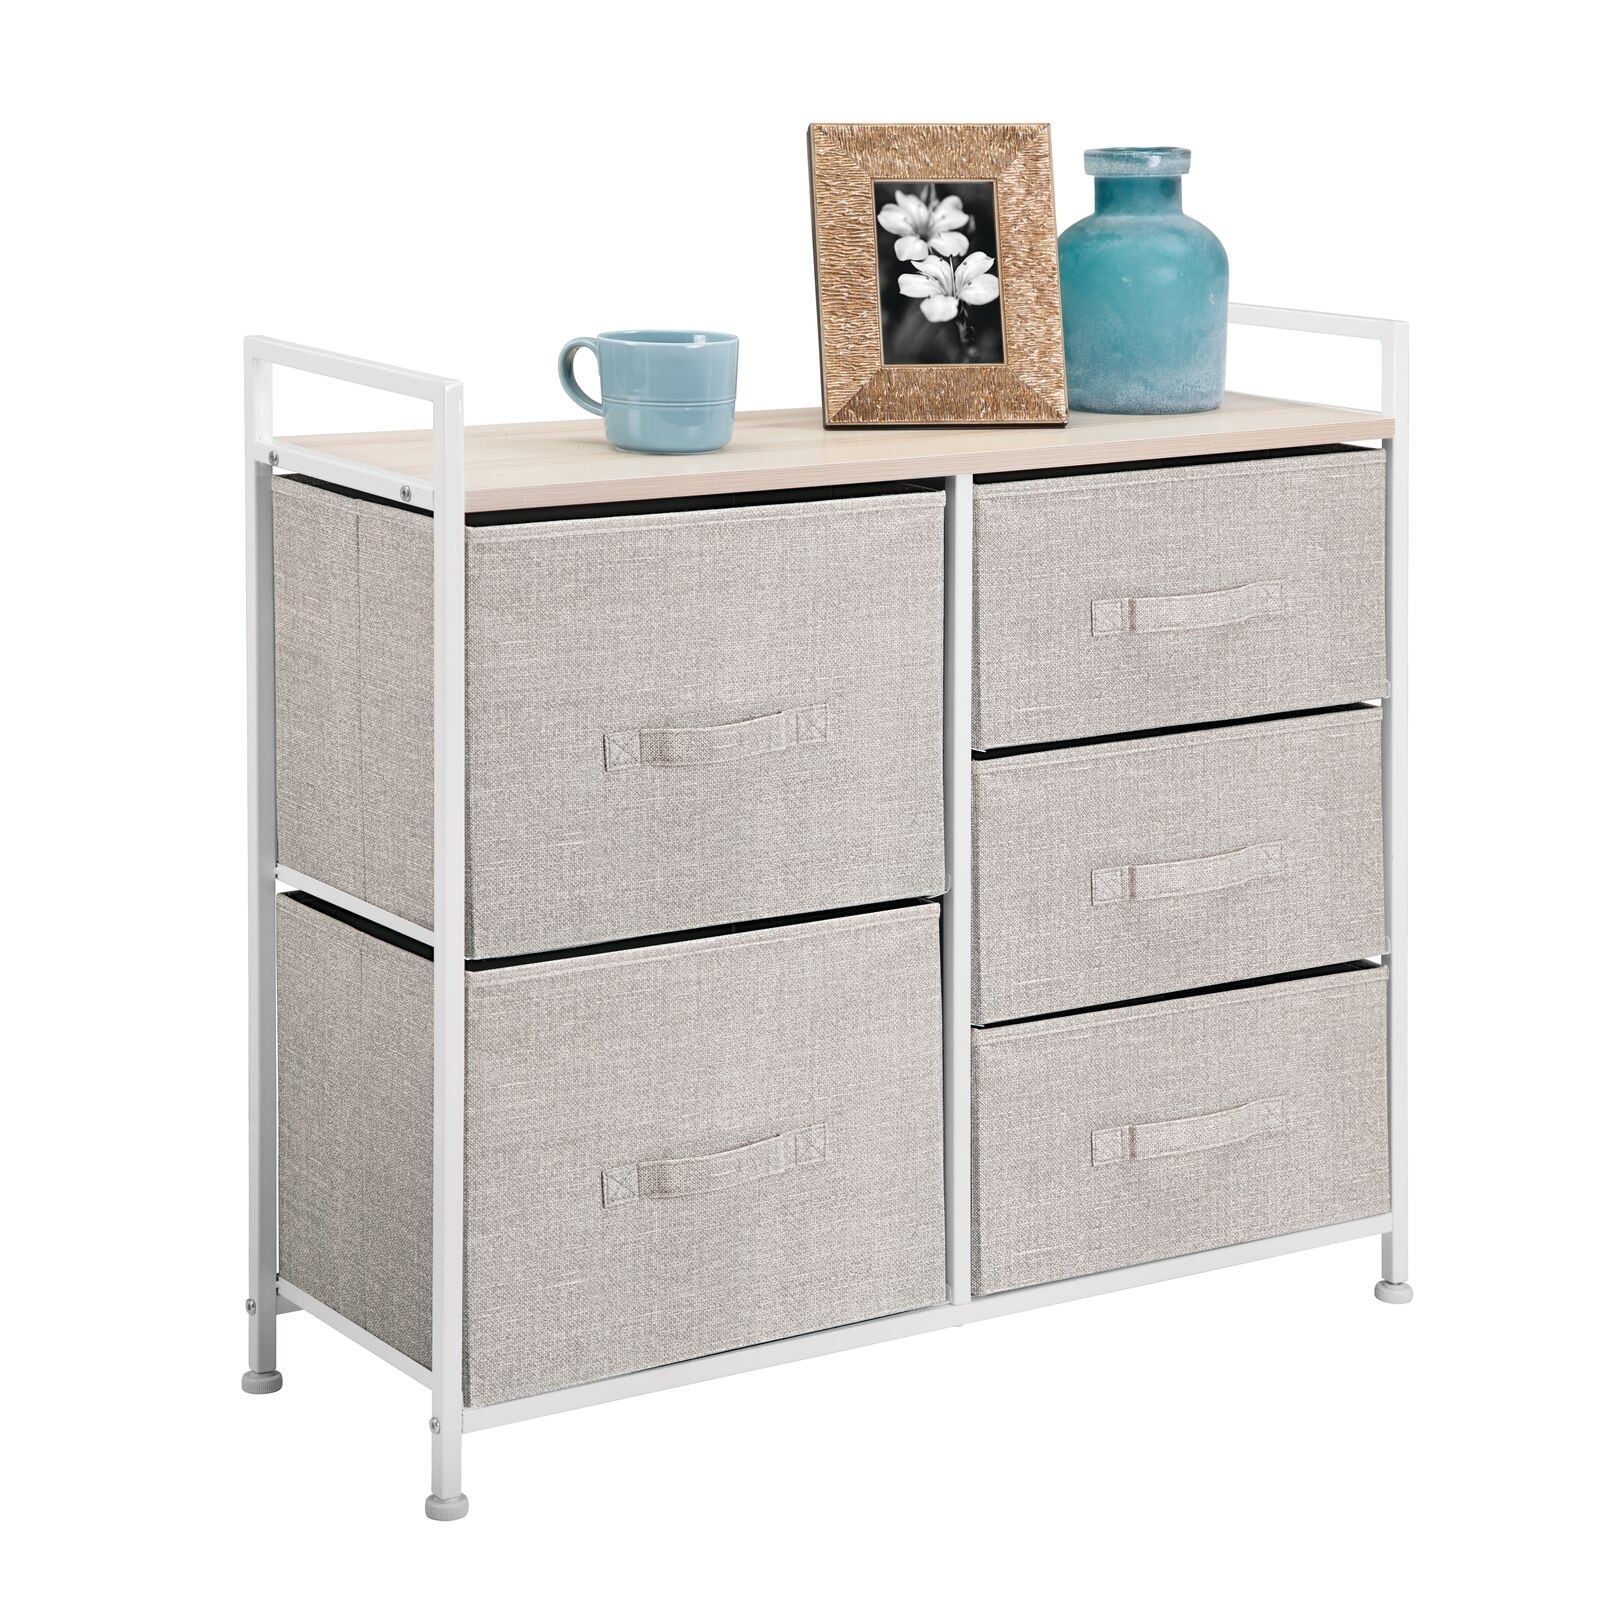 mDesign Wide Dresser 5 Drawers Storage Furniture Wood Top Easy Pull Fabric Bins 